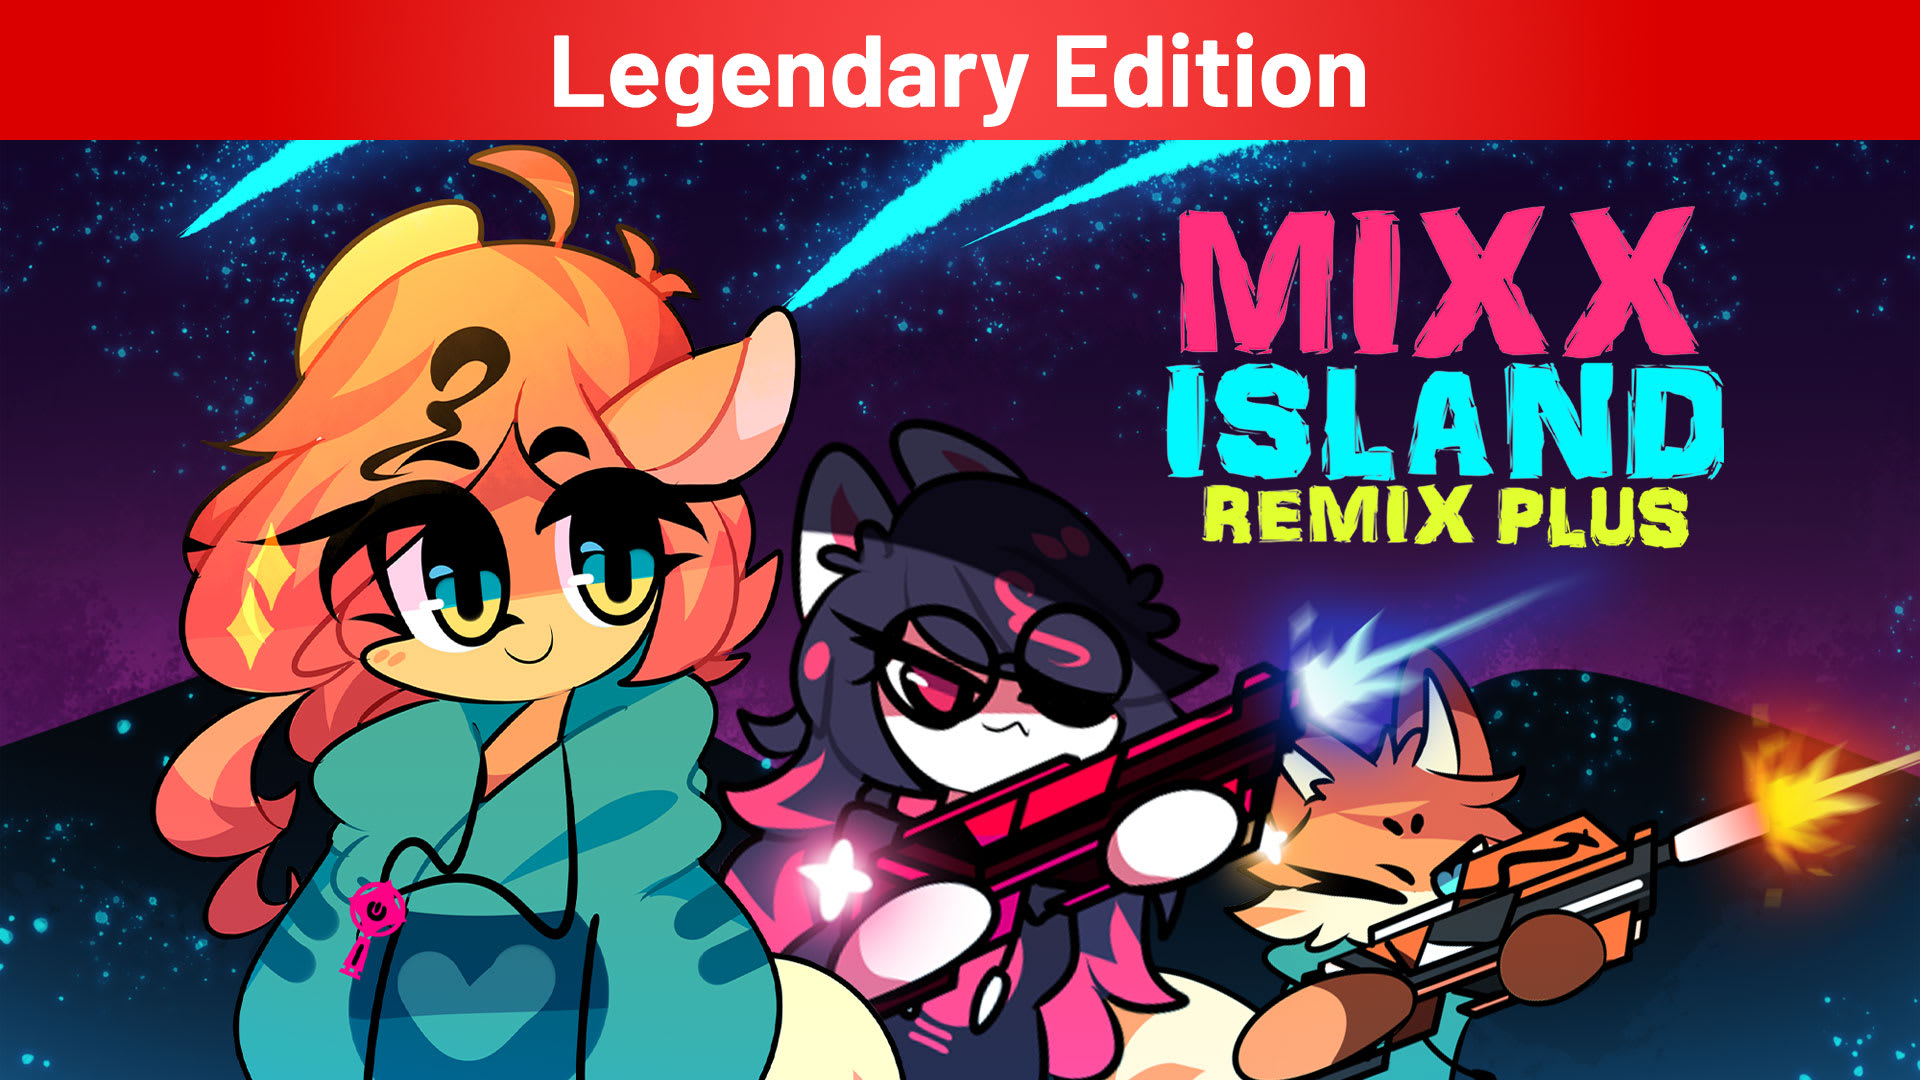 Mixx Island: Remix Plus Legendary Edition